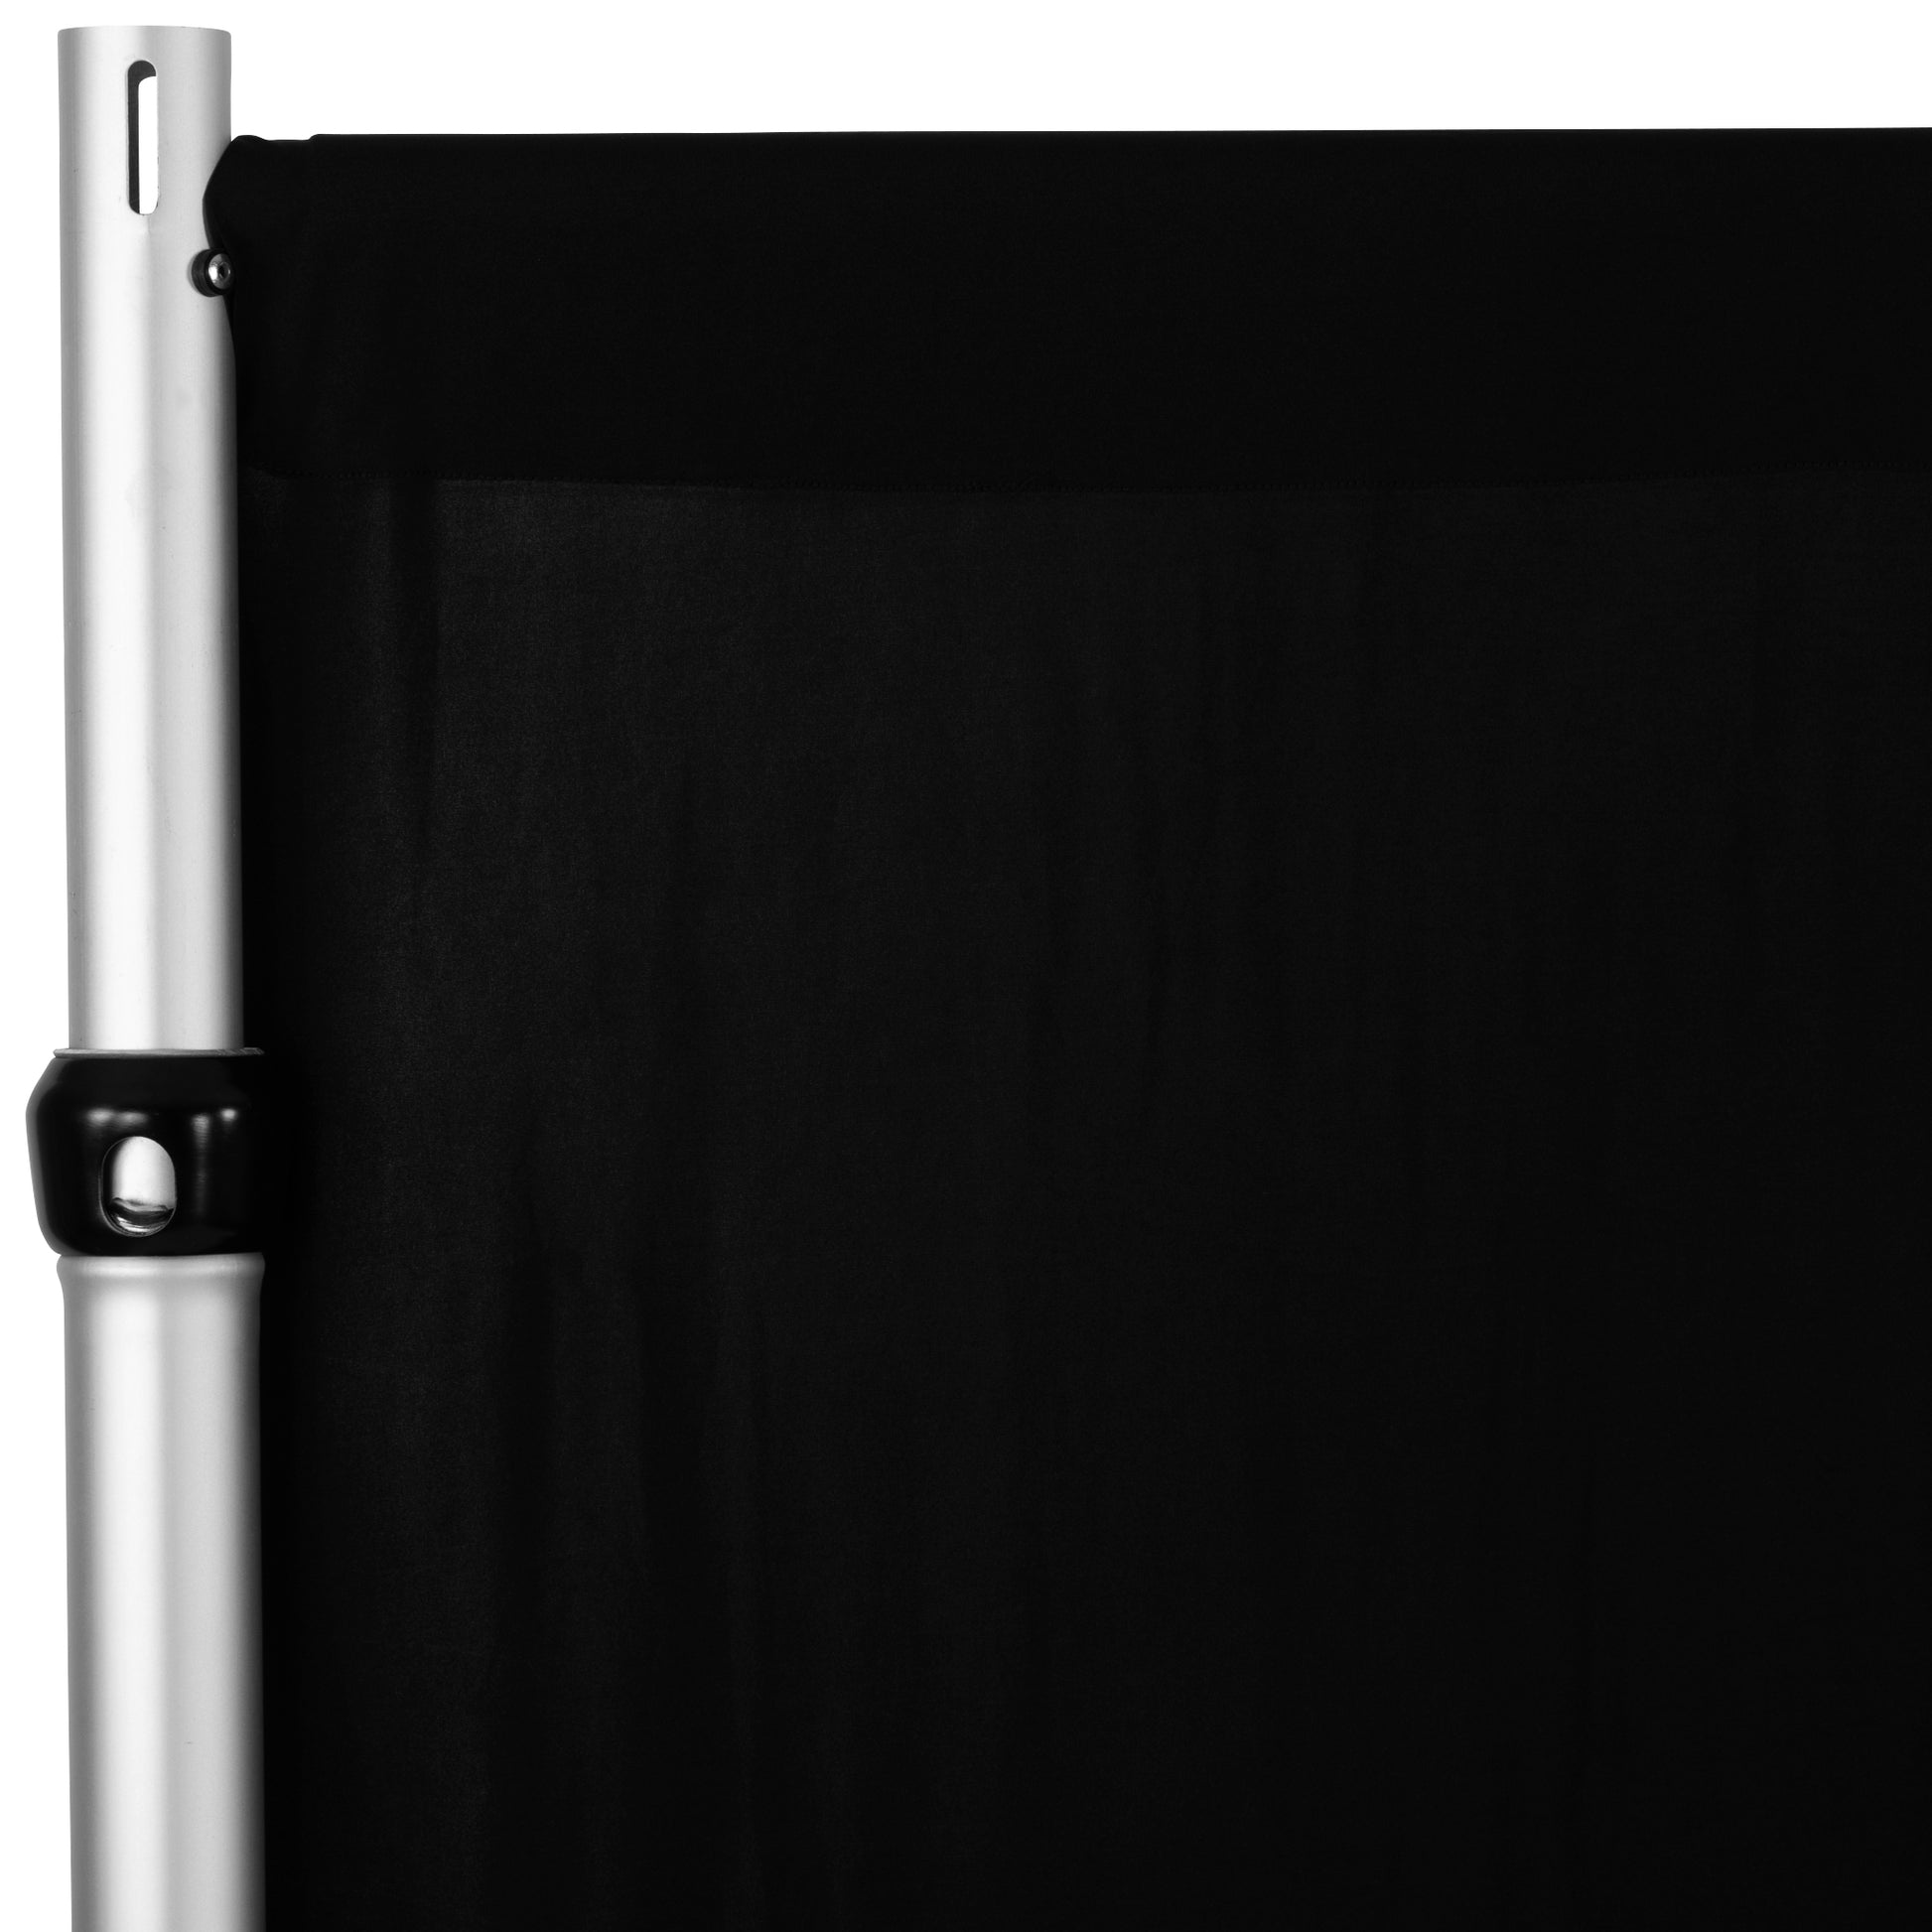 Spandex 4-way Stretch Drape Curtain 10ft H x 60" W - Black - CV Linens